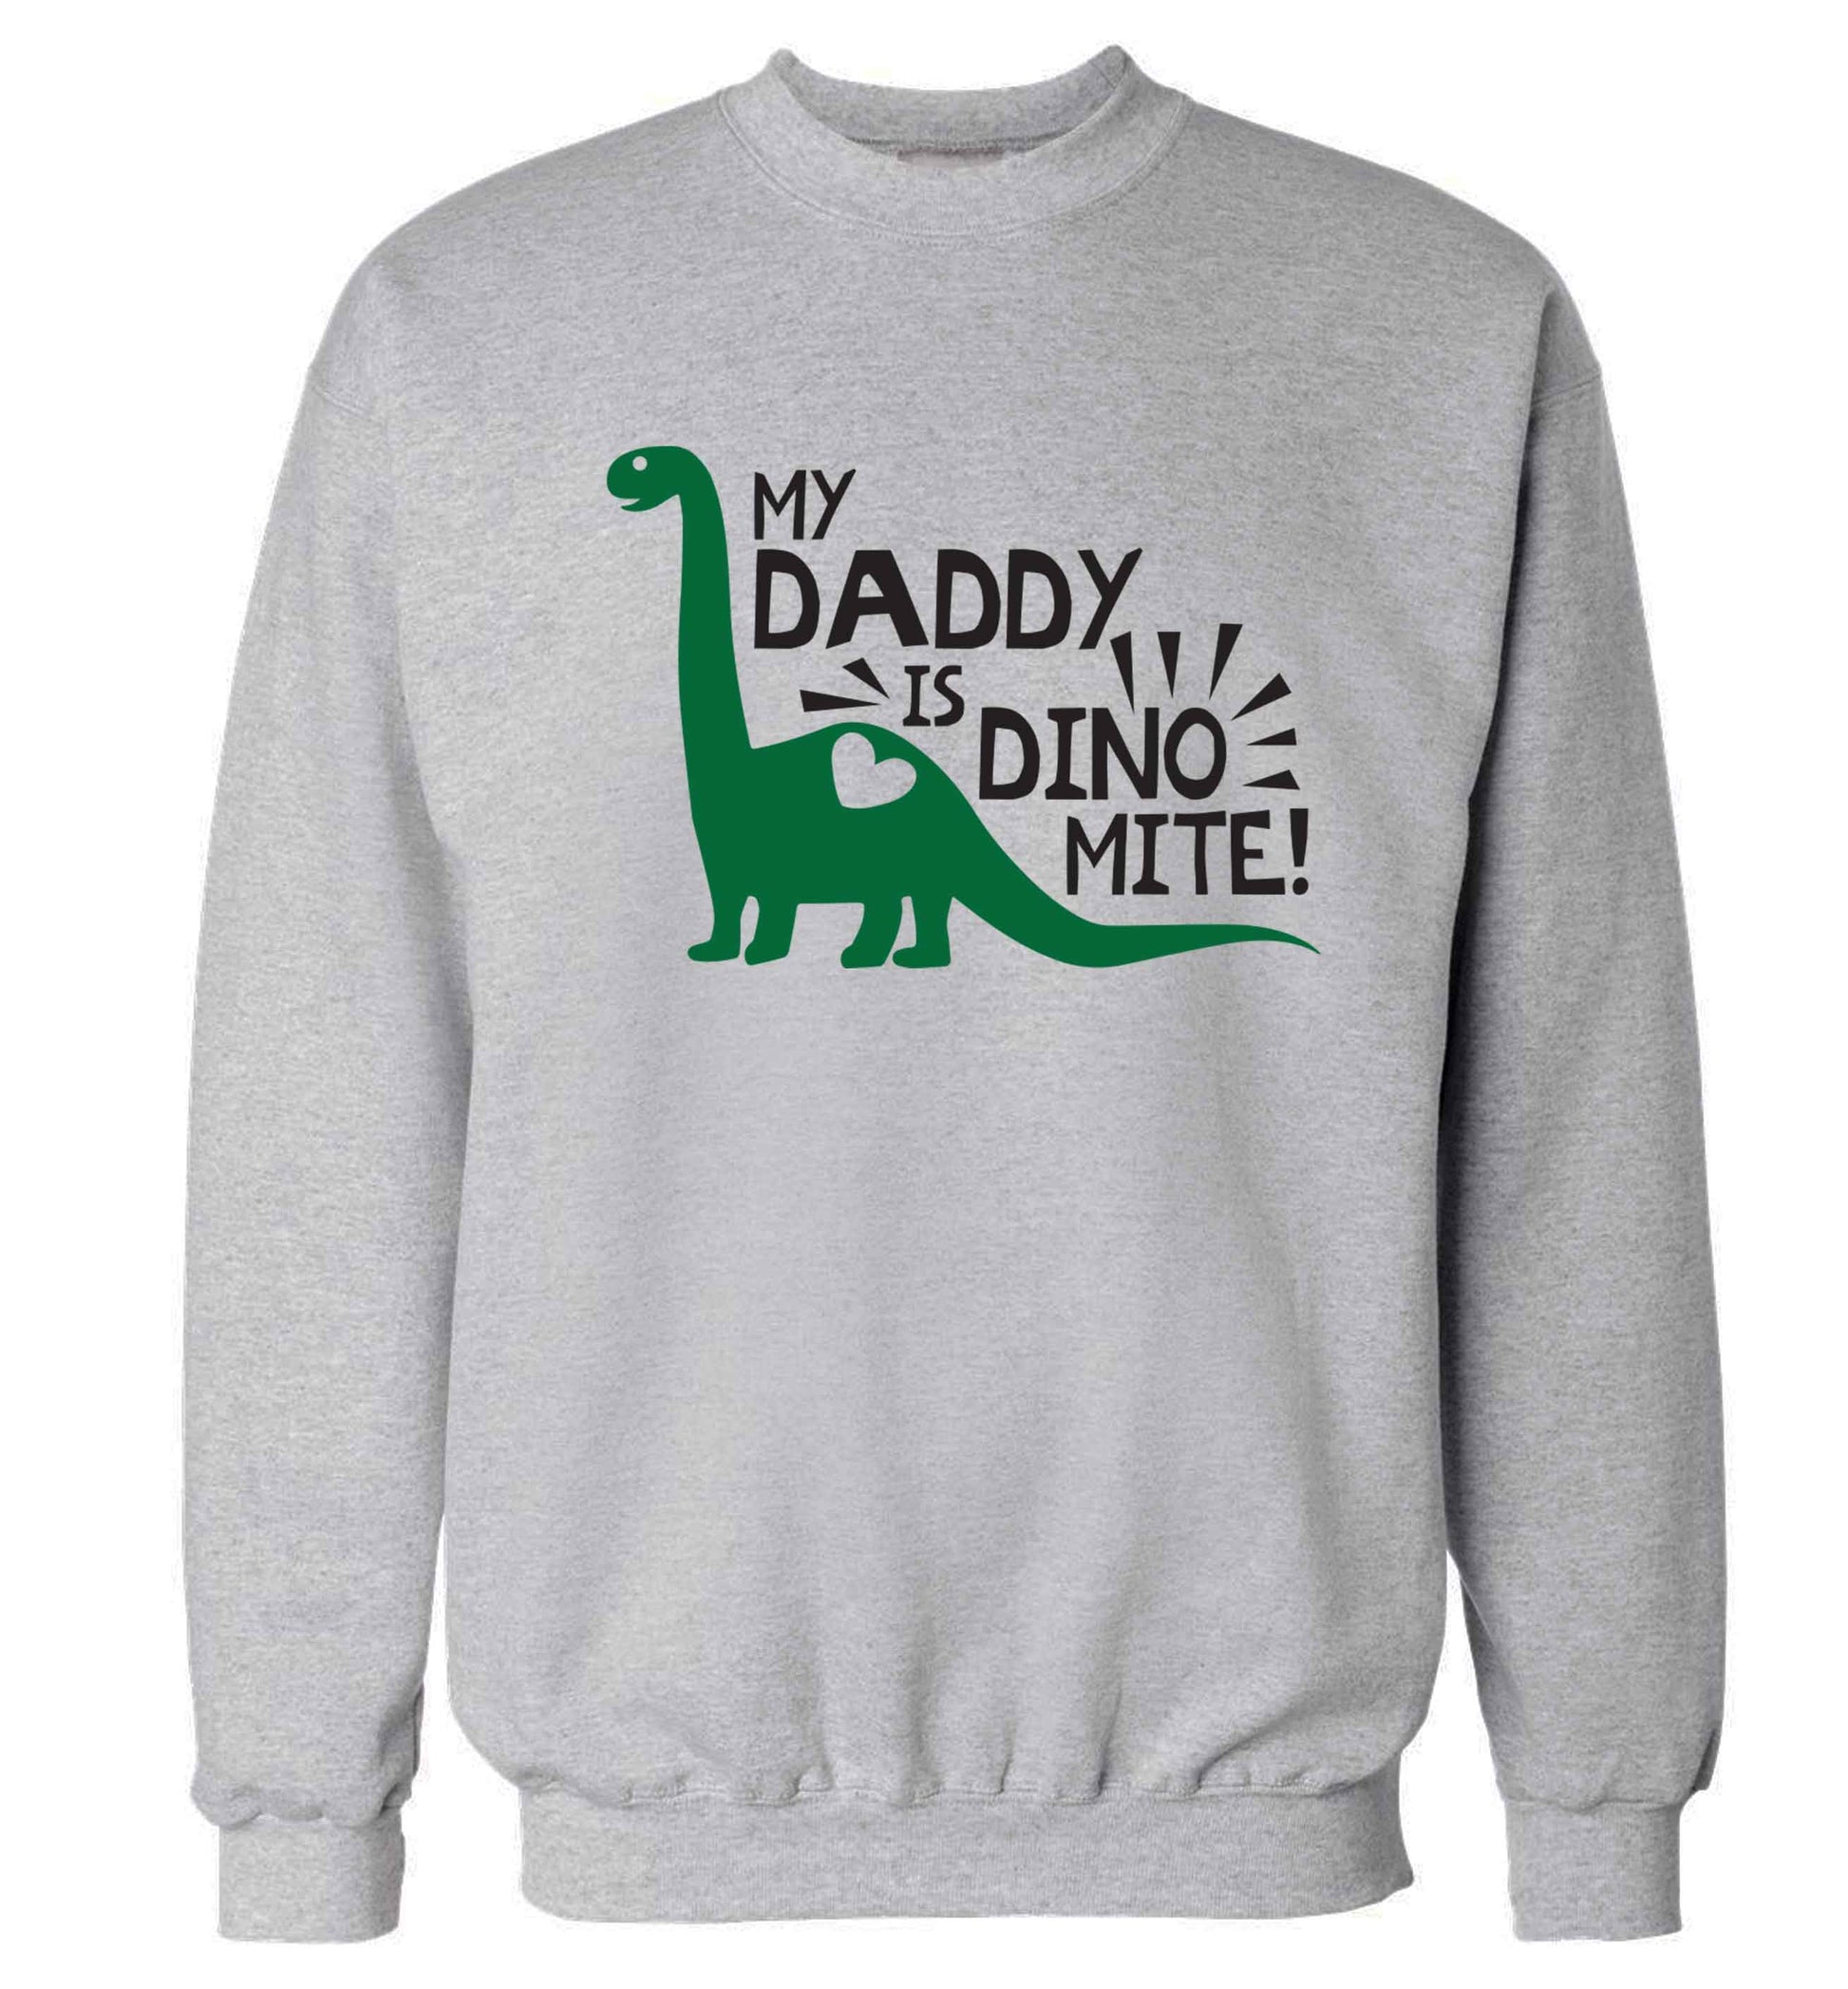 My daddy is dinomite! Adult's unisex grey Sweater 2XL